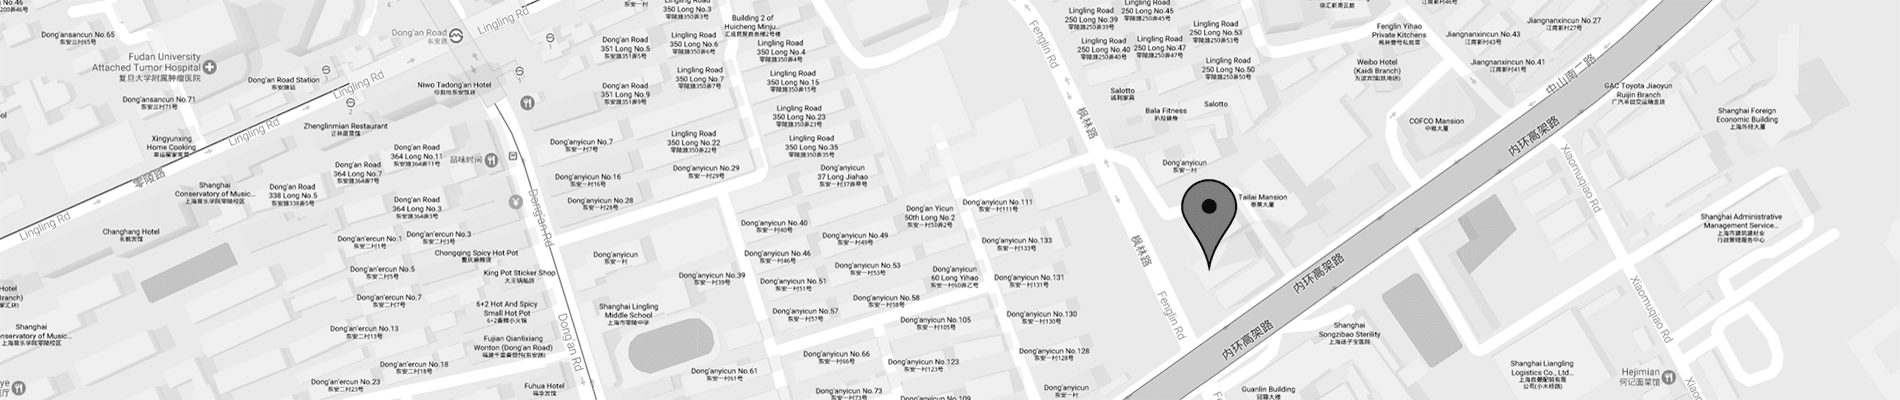 Google map of the studio location in Shanghai.